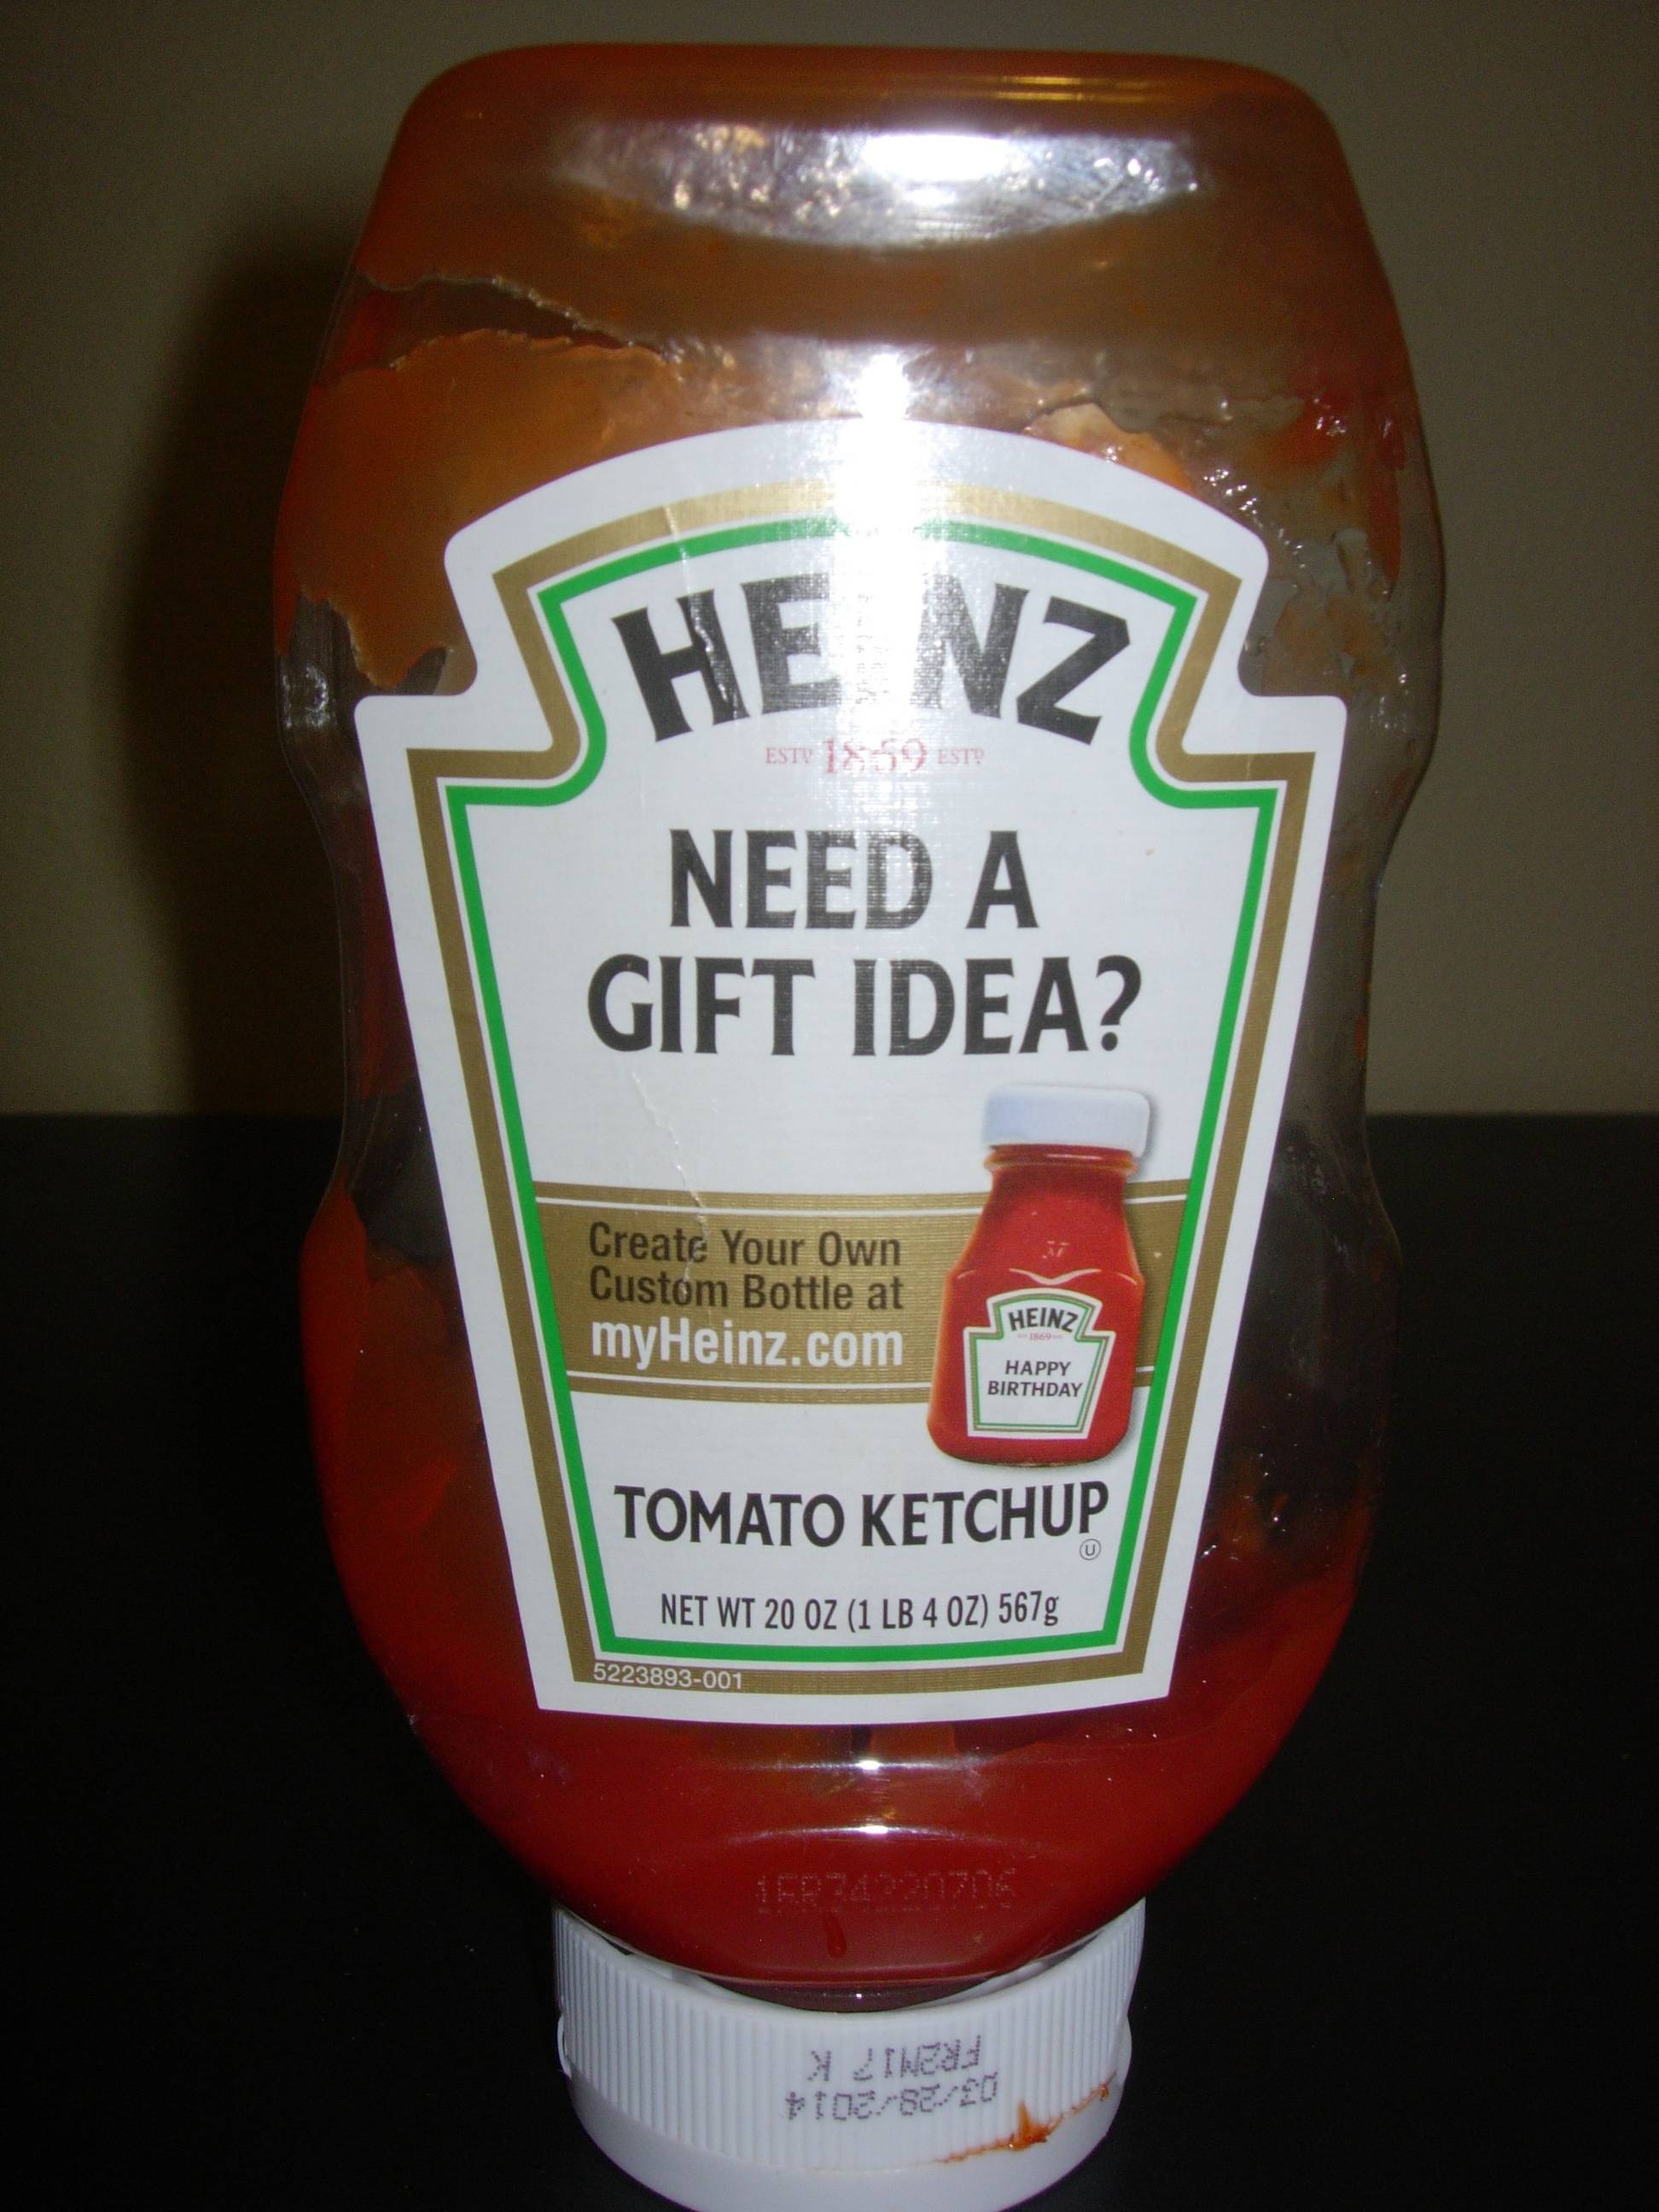 need a gift idea heinz ketchup - Esty Este He Nz Need A Gift Idea? Create Your Own Custom Bottle at myHeinz.com Heinz 1569 Happy Birthday Tomato Ketchup Net Wt 20 Oz 1 Lb 4 Oz 567g 5223893001